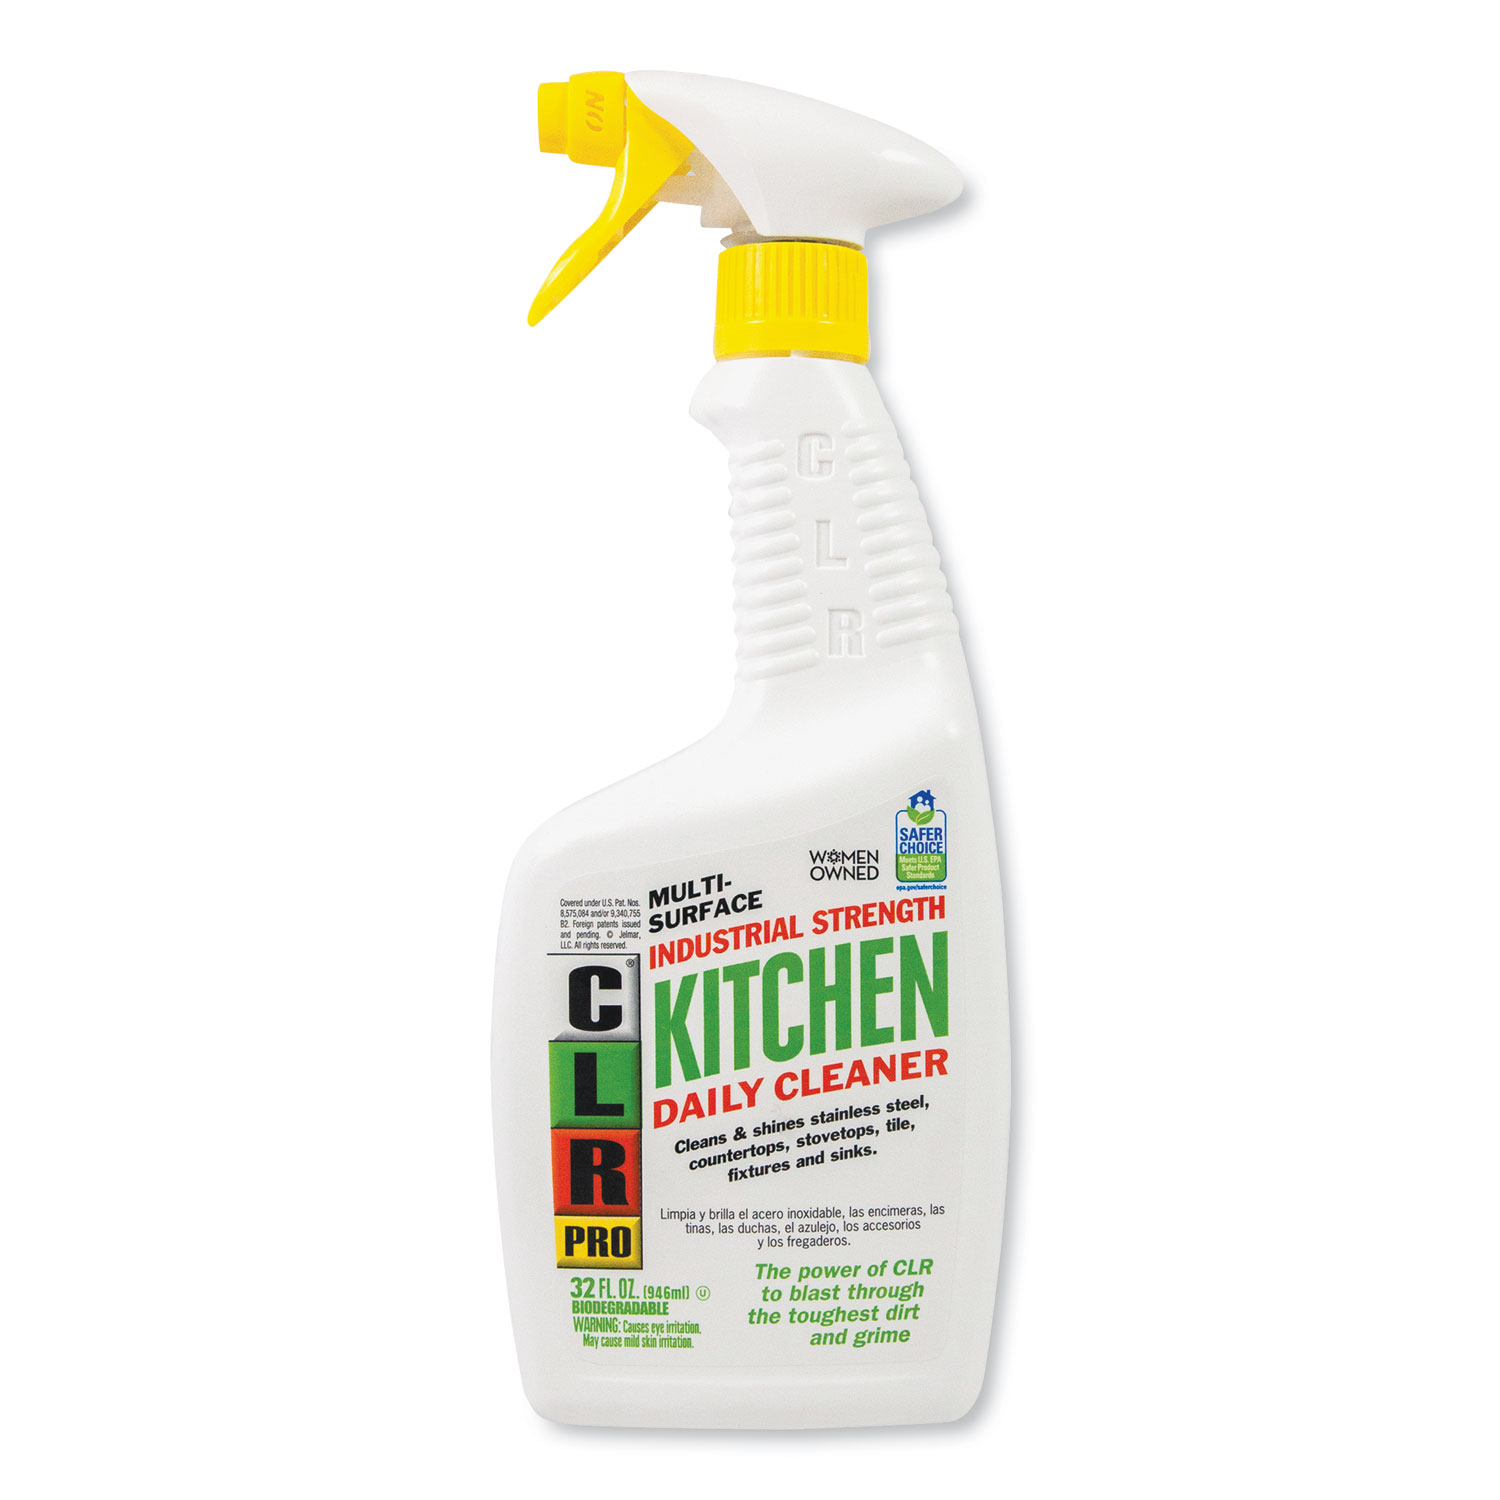  CLR PRO KITCHEN-32PRO Kitchen Daily Cleaner, Light Lavender Scent, 32 oz Spray Bottle (JELKITCHEN32EA) 